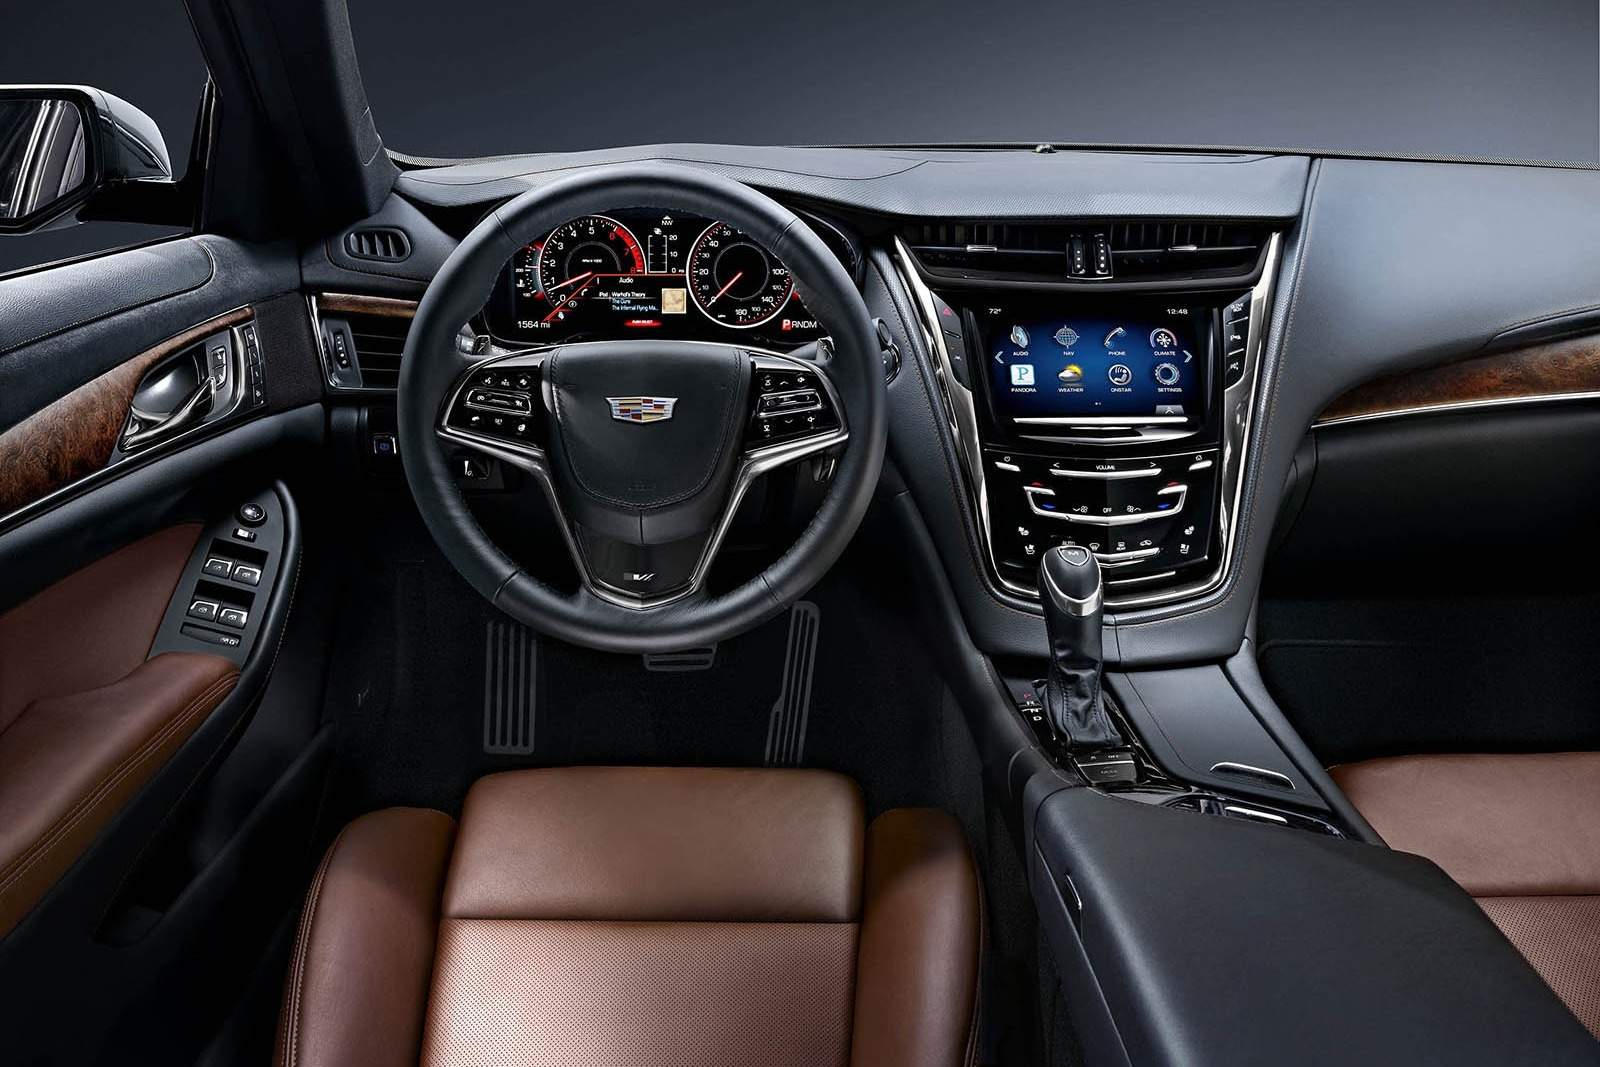 2017 Cadillac CTS Sedan Interior Photos | CarBuzz